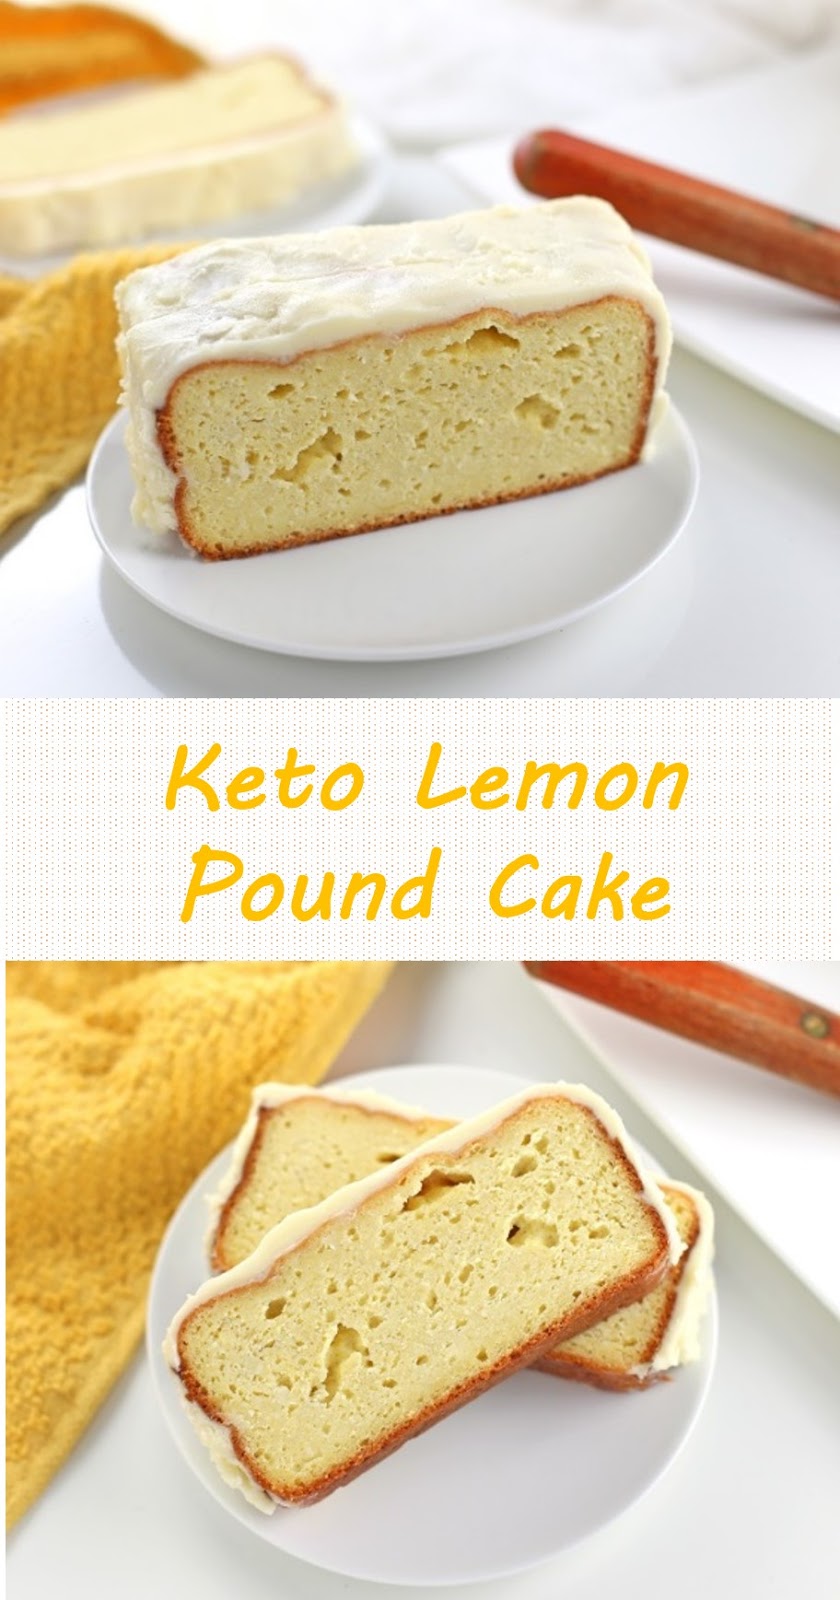 Keto Lemon Pound Cake